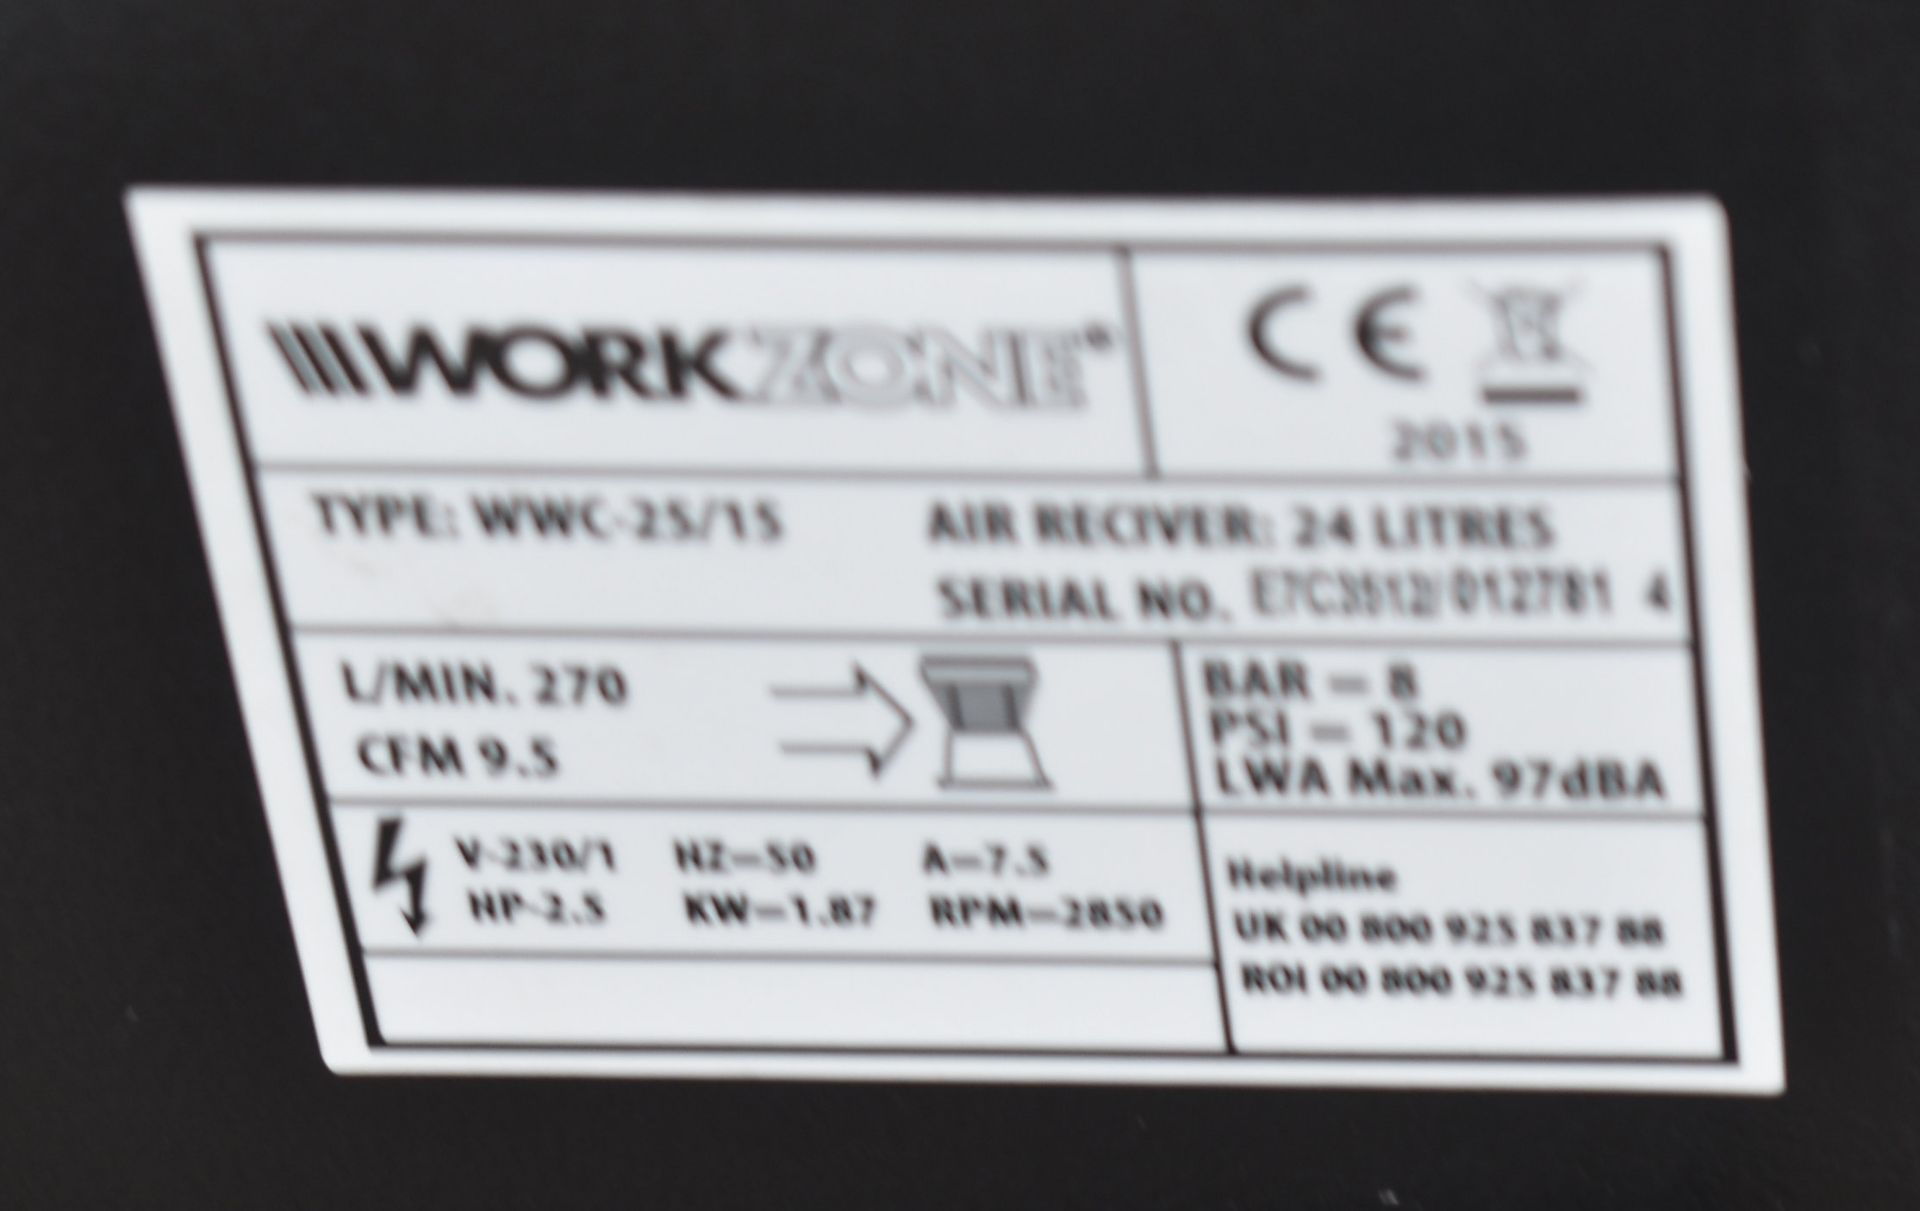 1 x WORKZONE Wwc 25/15 Air Compressor - 24L Receiver, 2.5Hp - RRP £190 - Ref: K260 - CL905 - Locatio - Image 6 of 14